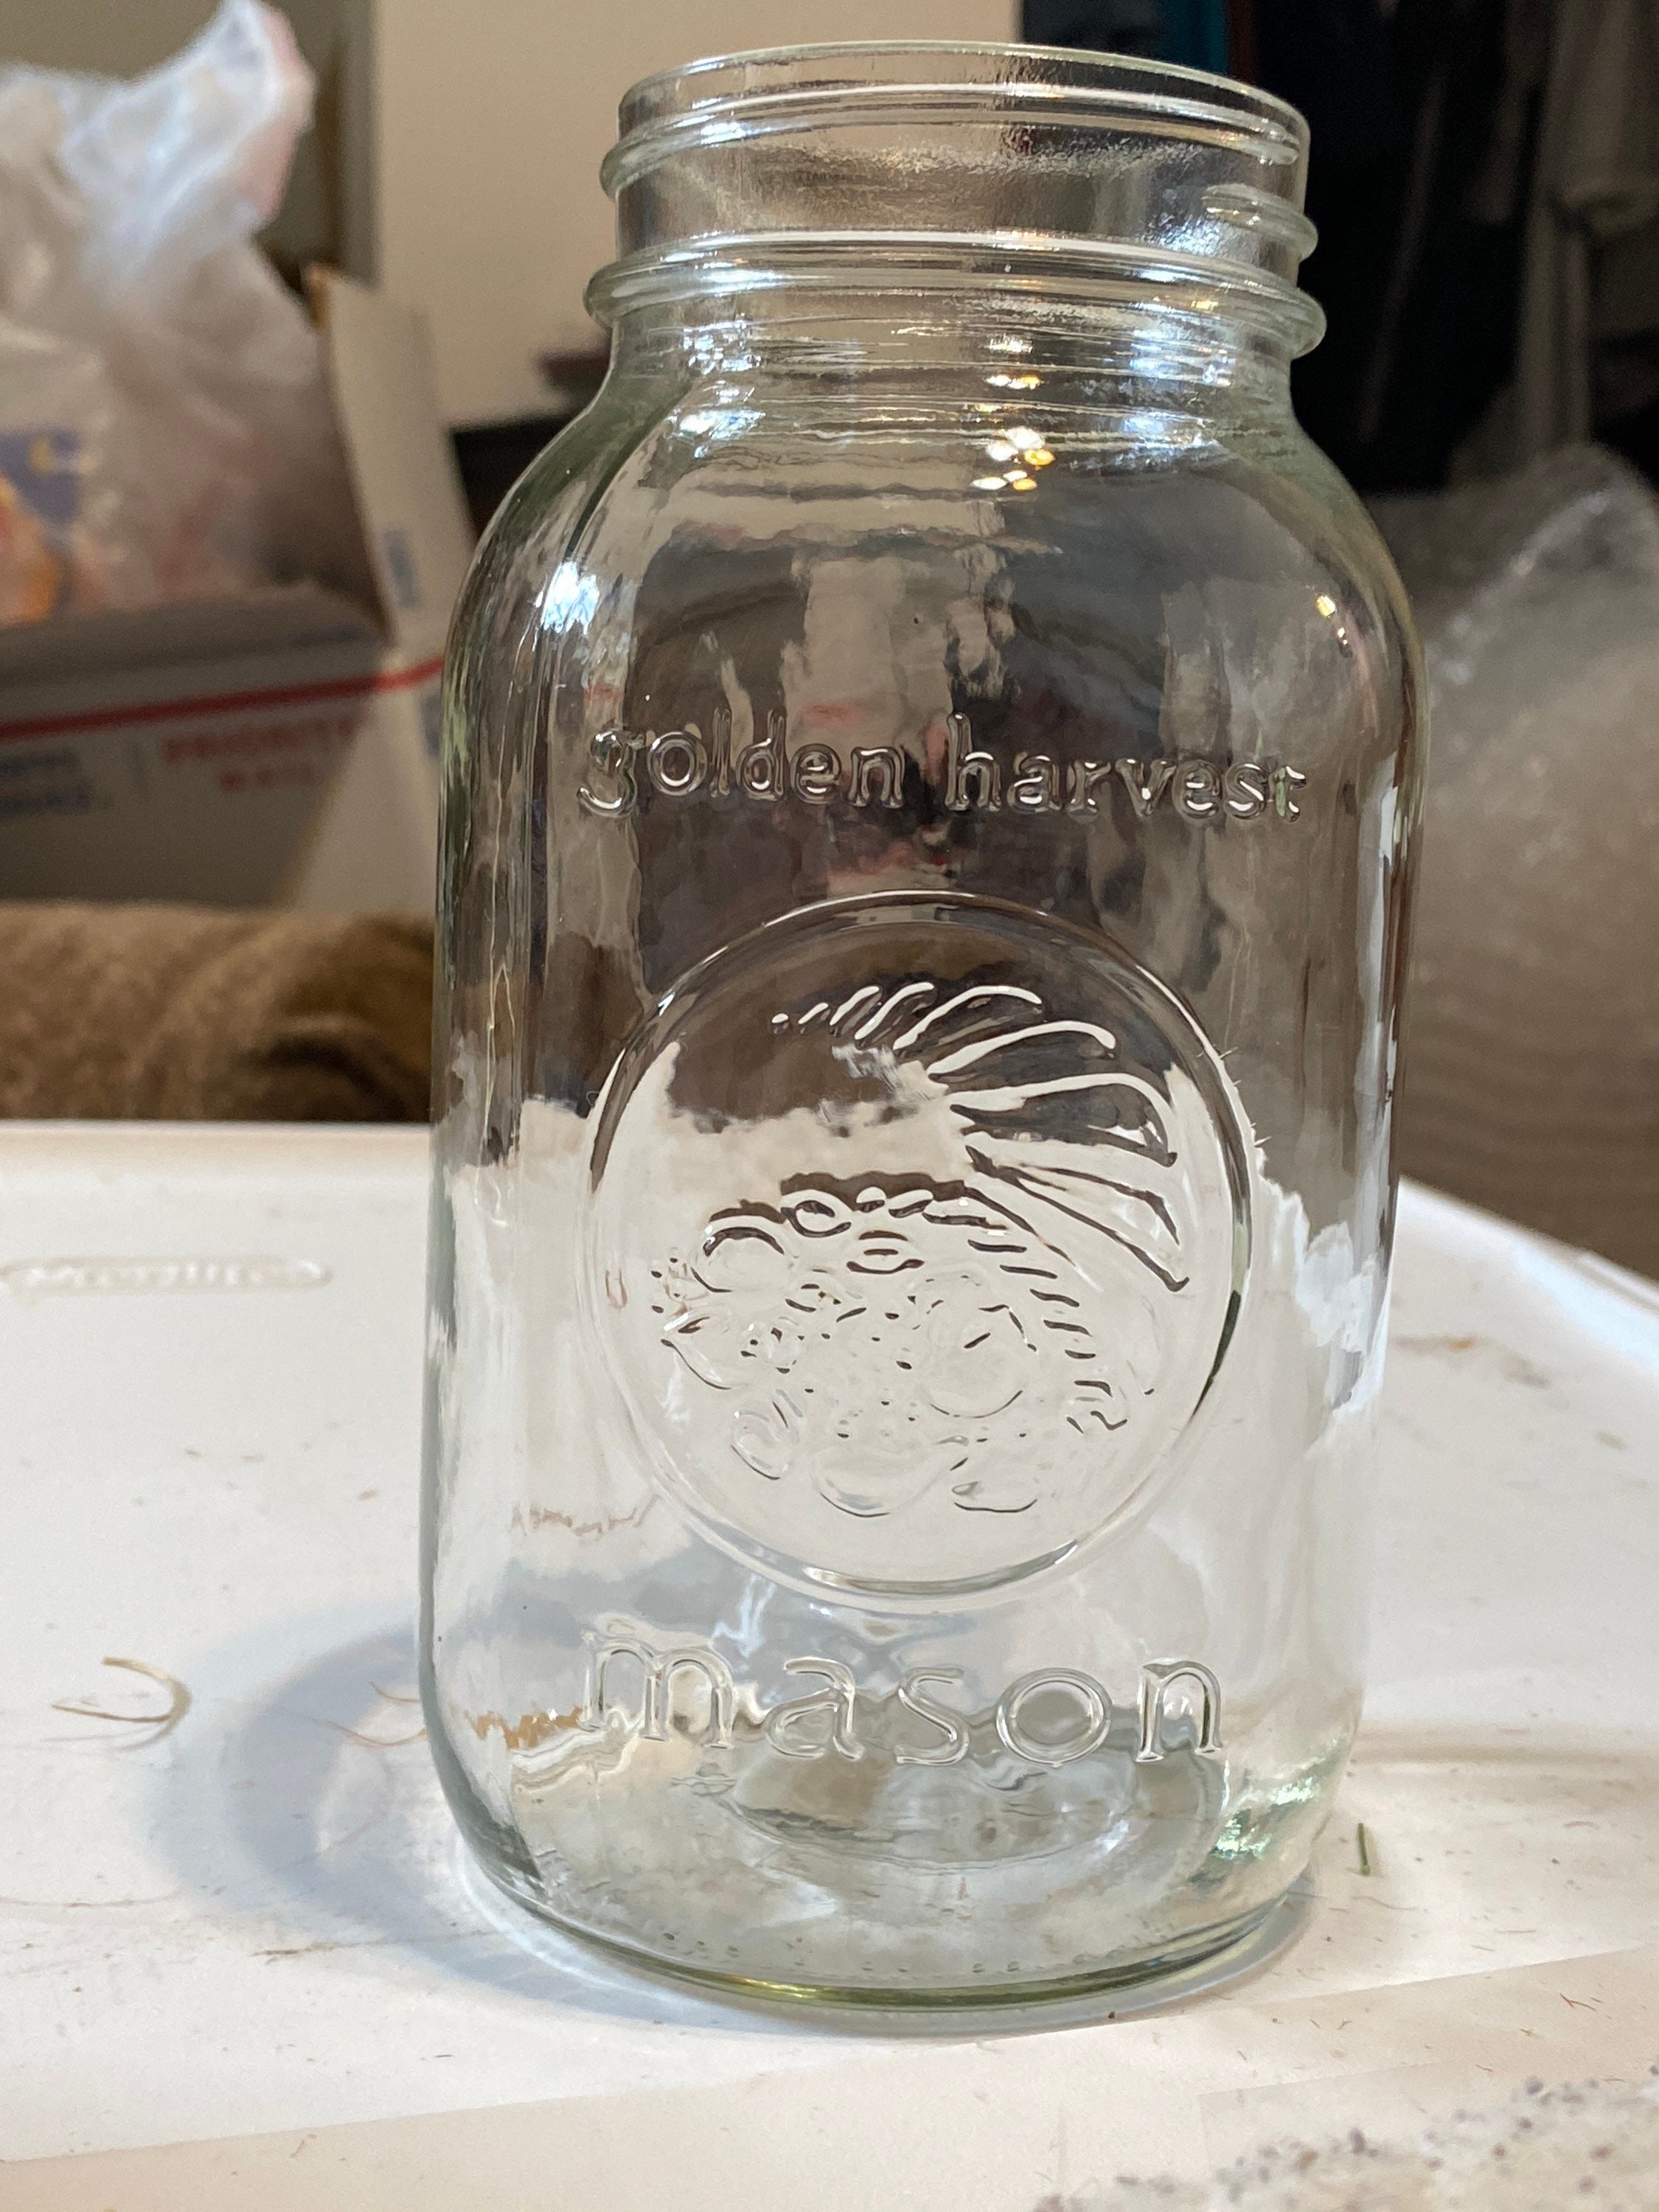 8 oz Mason Glass Jar with Lids - Choose from Flat, Safety Button, Straw  Hole, Daisy Cut